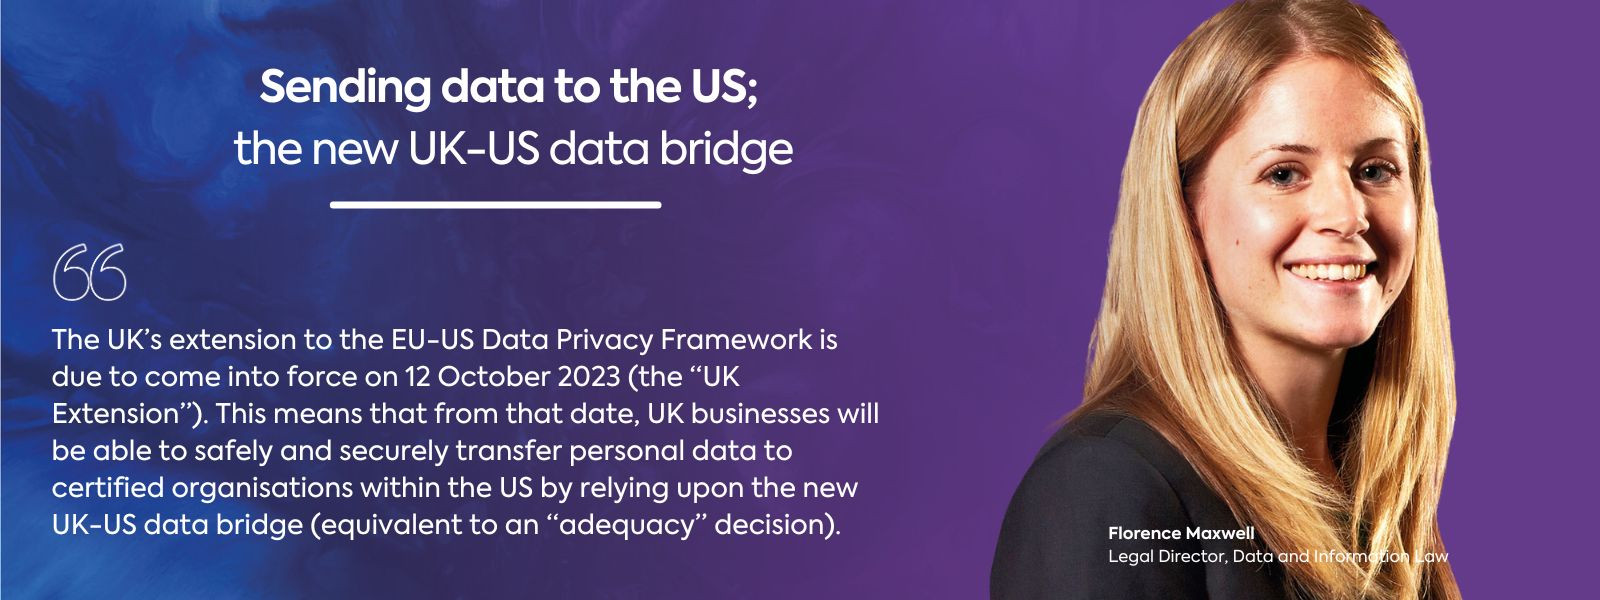 Sending data to the US – the new UK-US data bridge